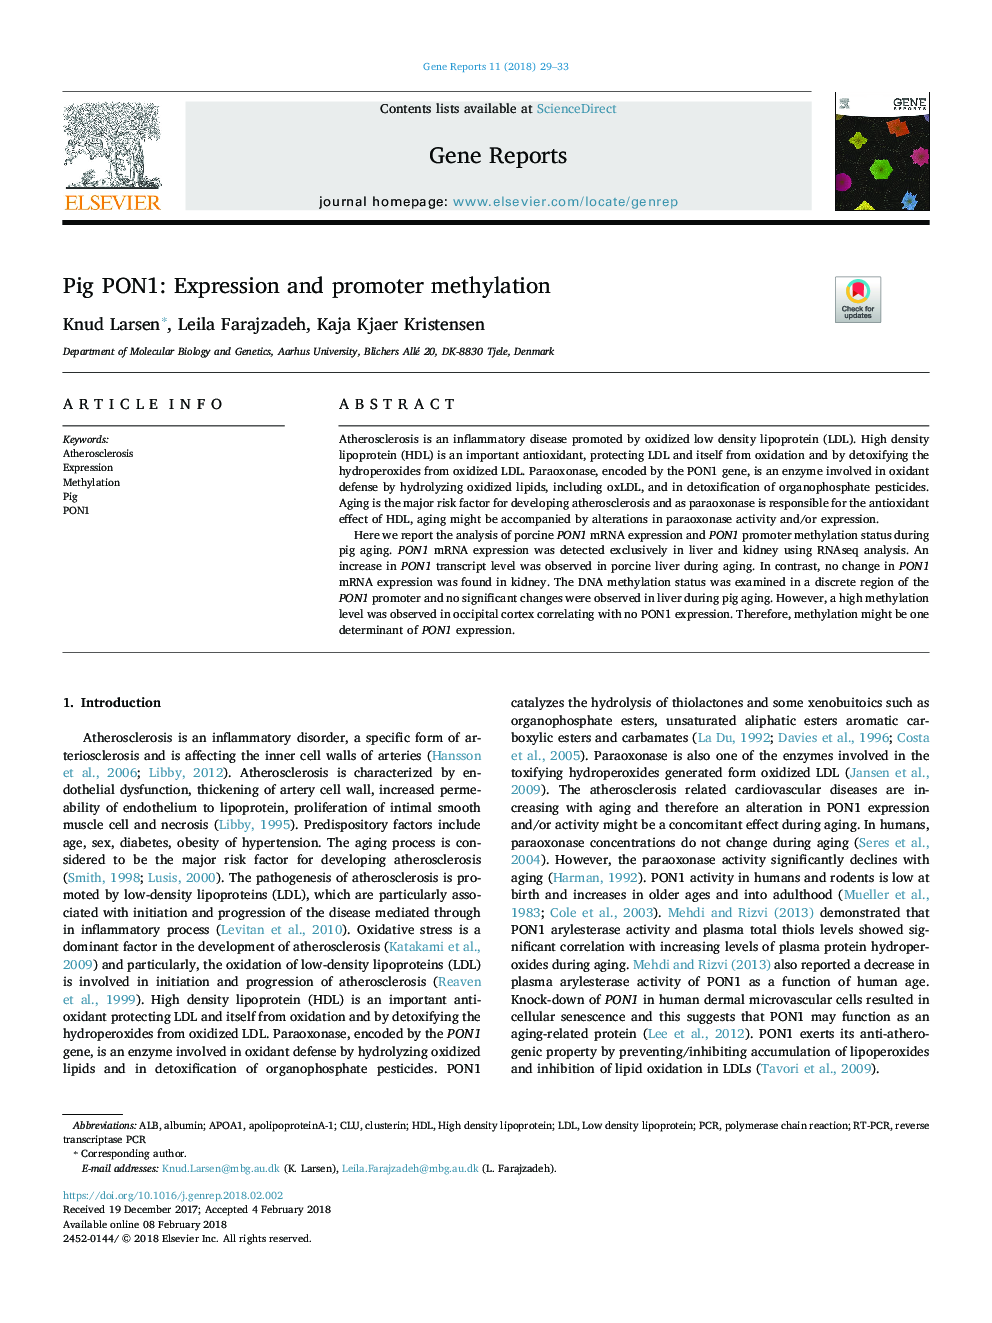 Pig PON1: Expression and promoter methylation